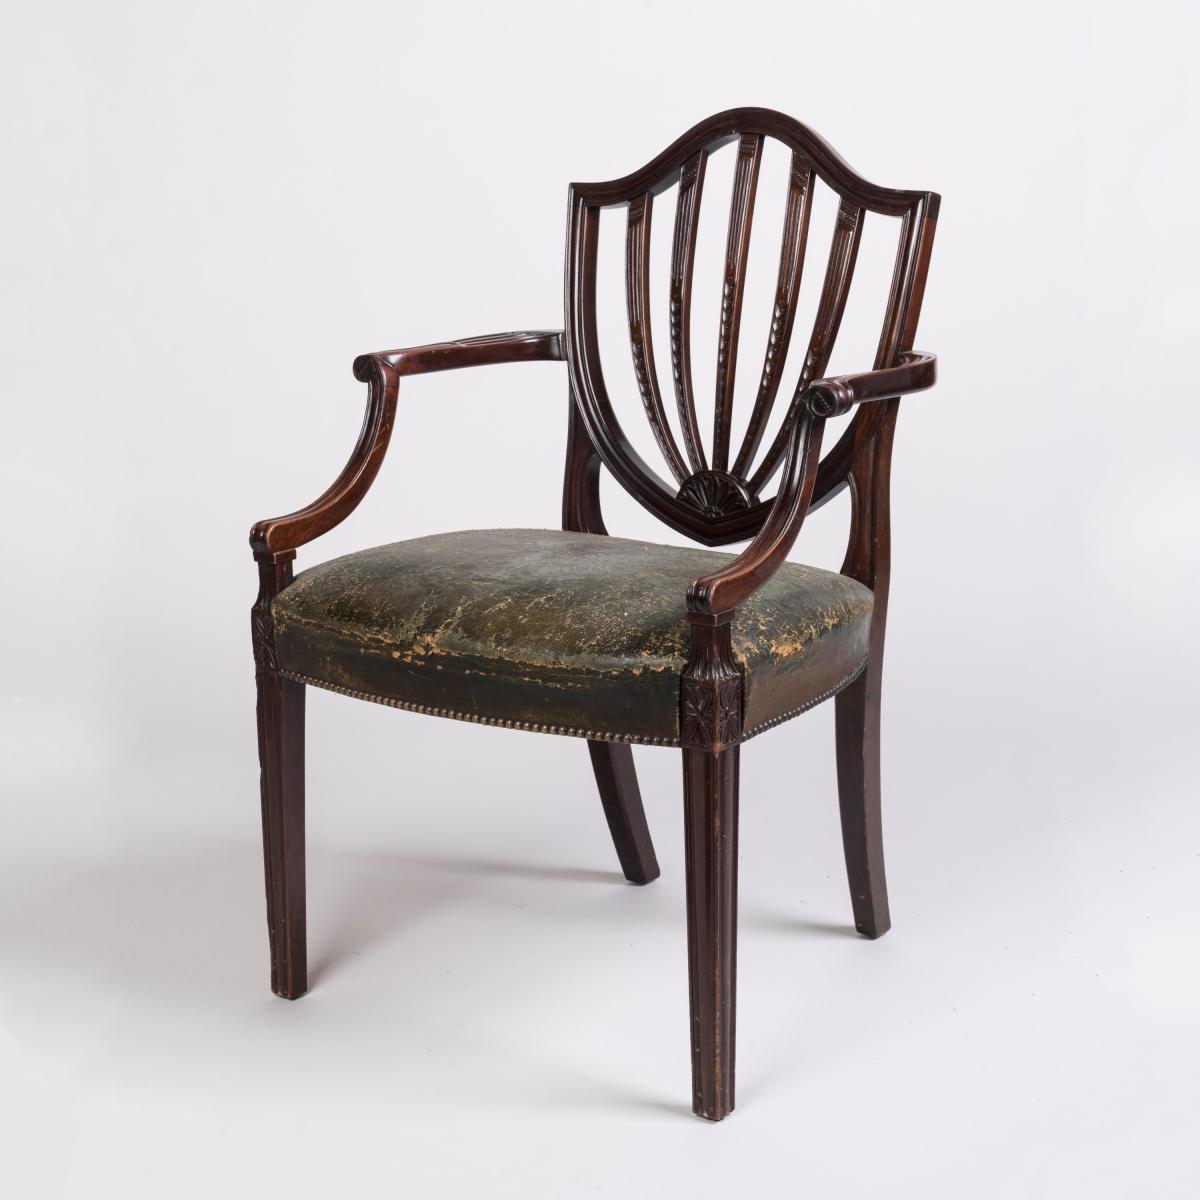 Twelve George III Style Dining Chairs